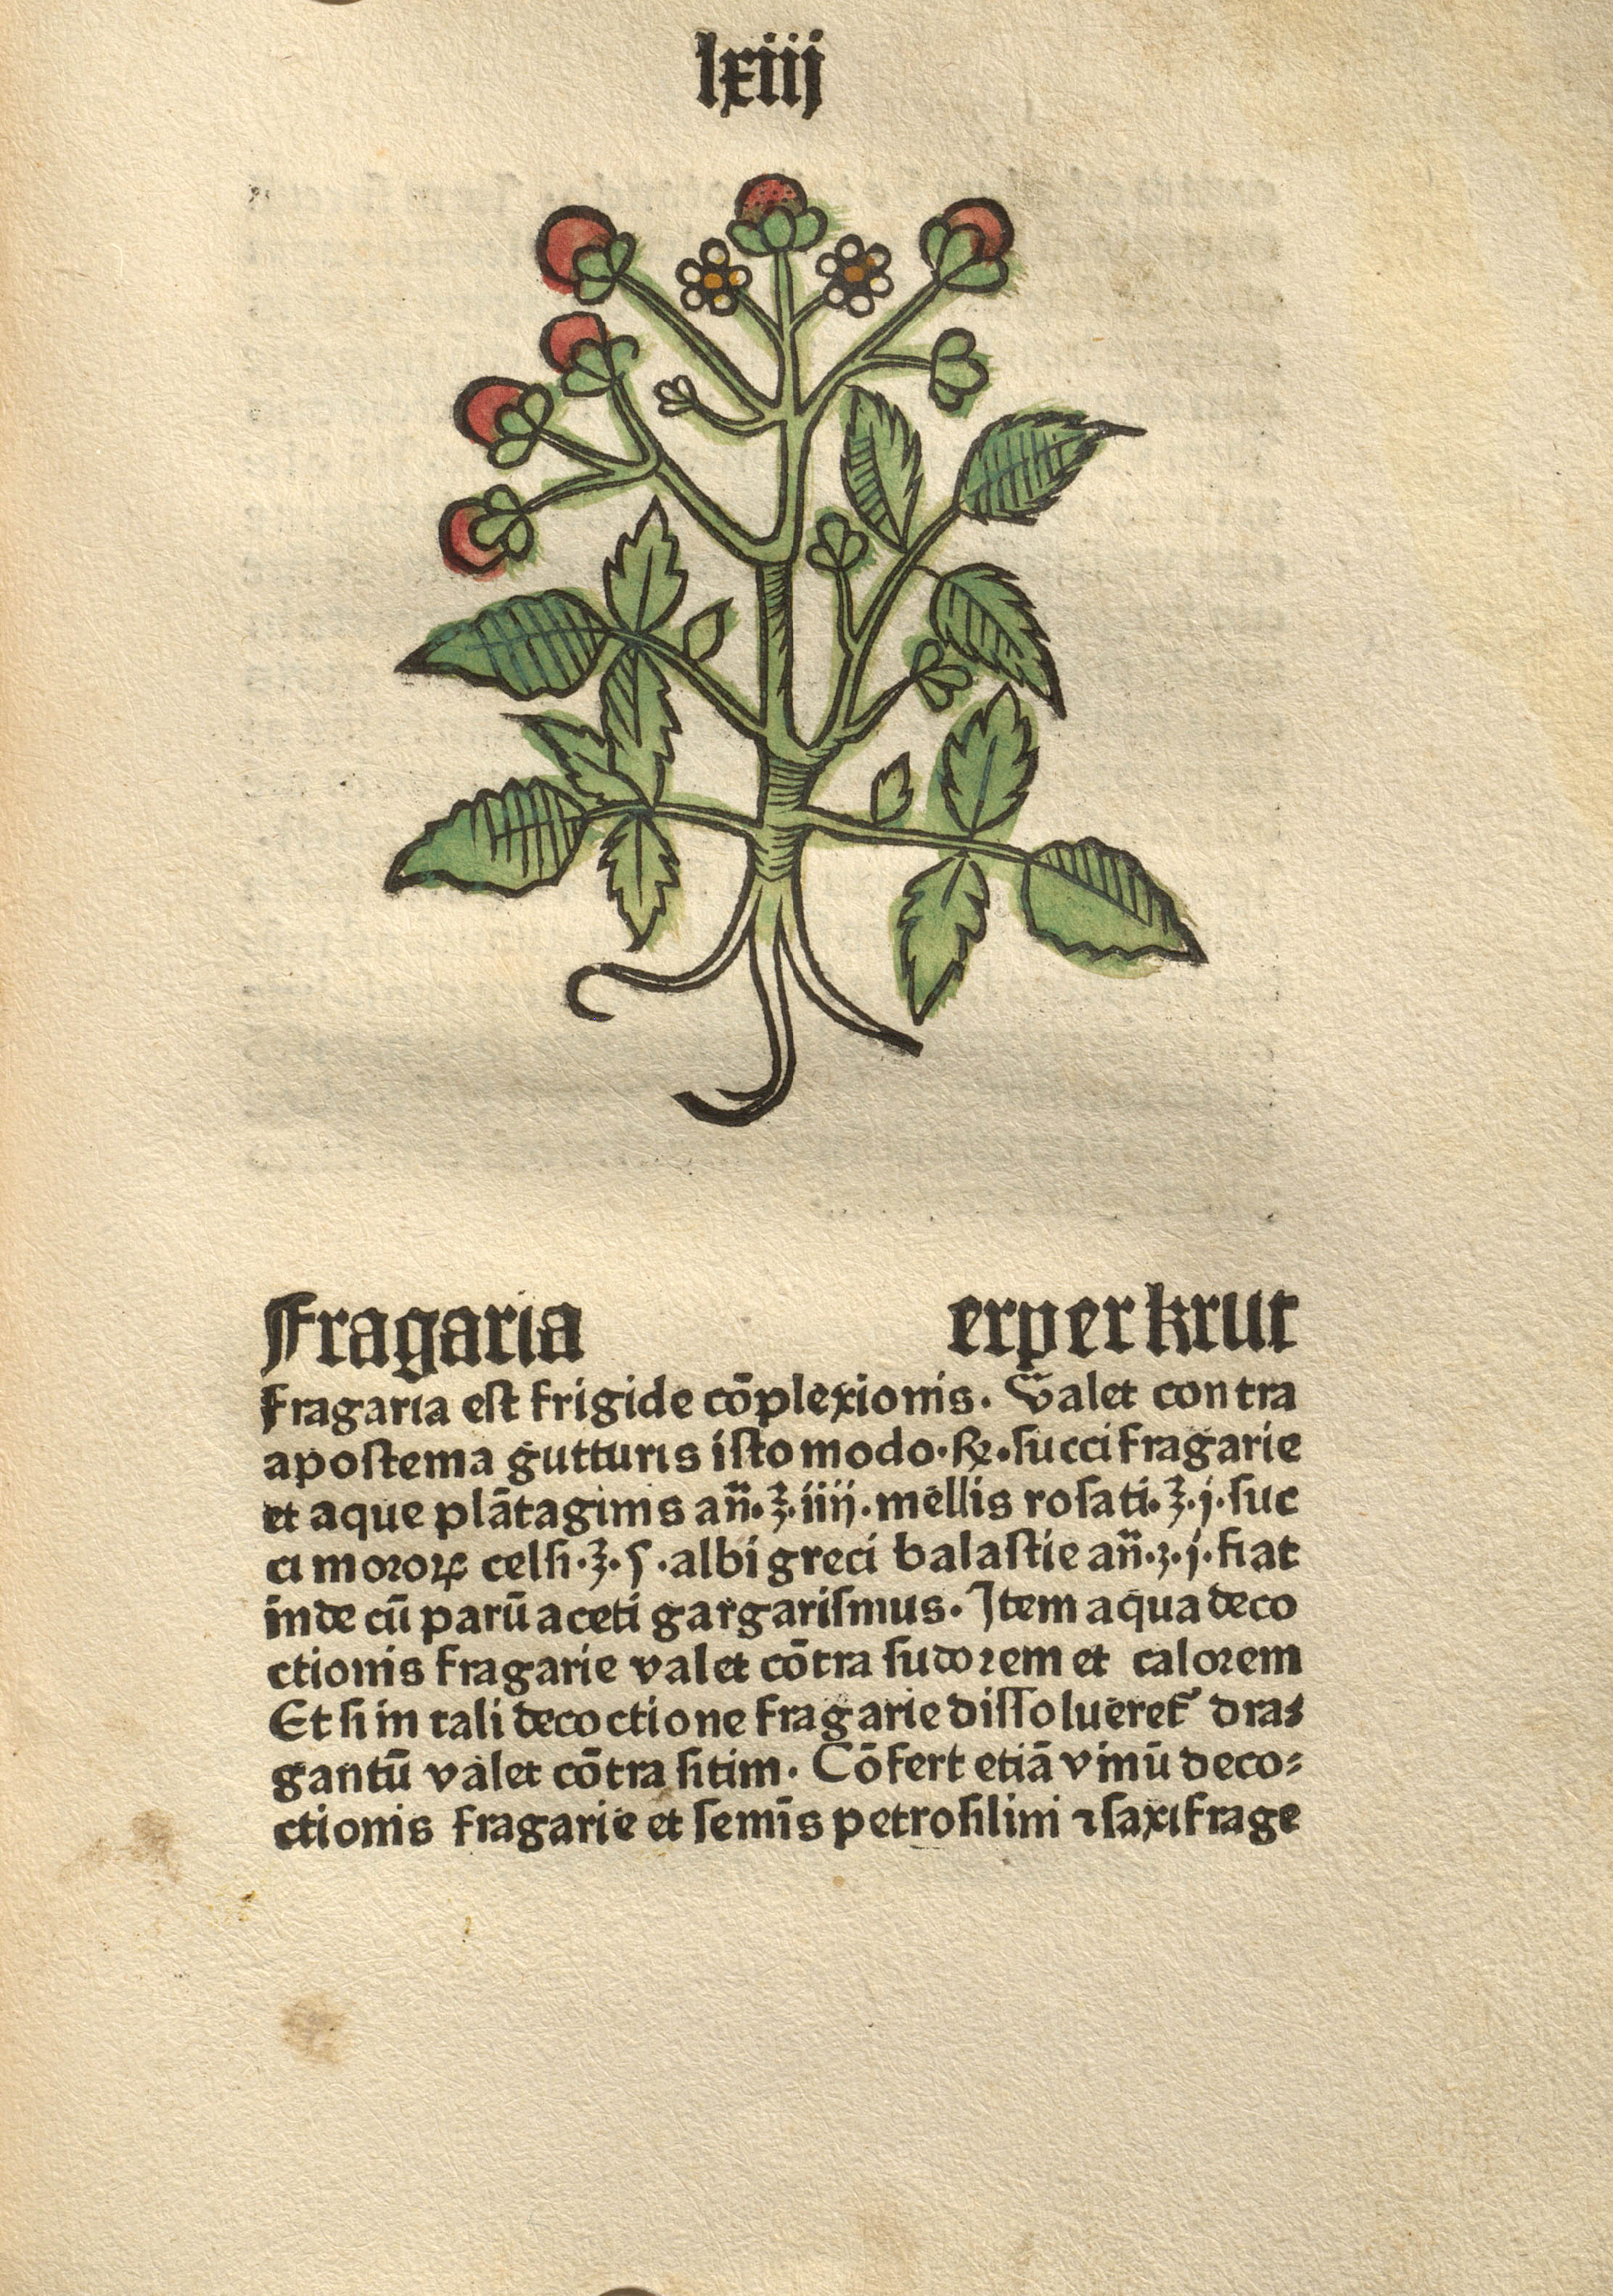 Erdbeerpflanze (kolorierter Holzschnitt) in Herbarius, gedruckt 1484 @ Universitätsbibliothek